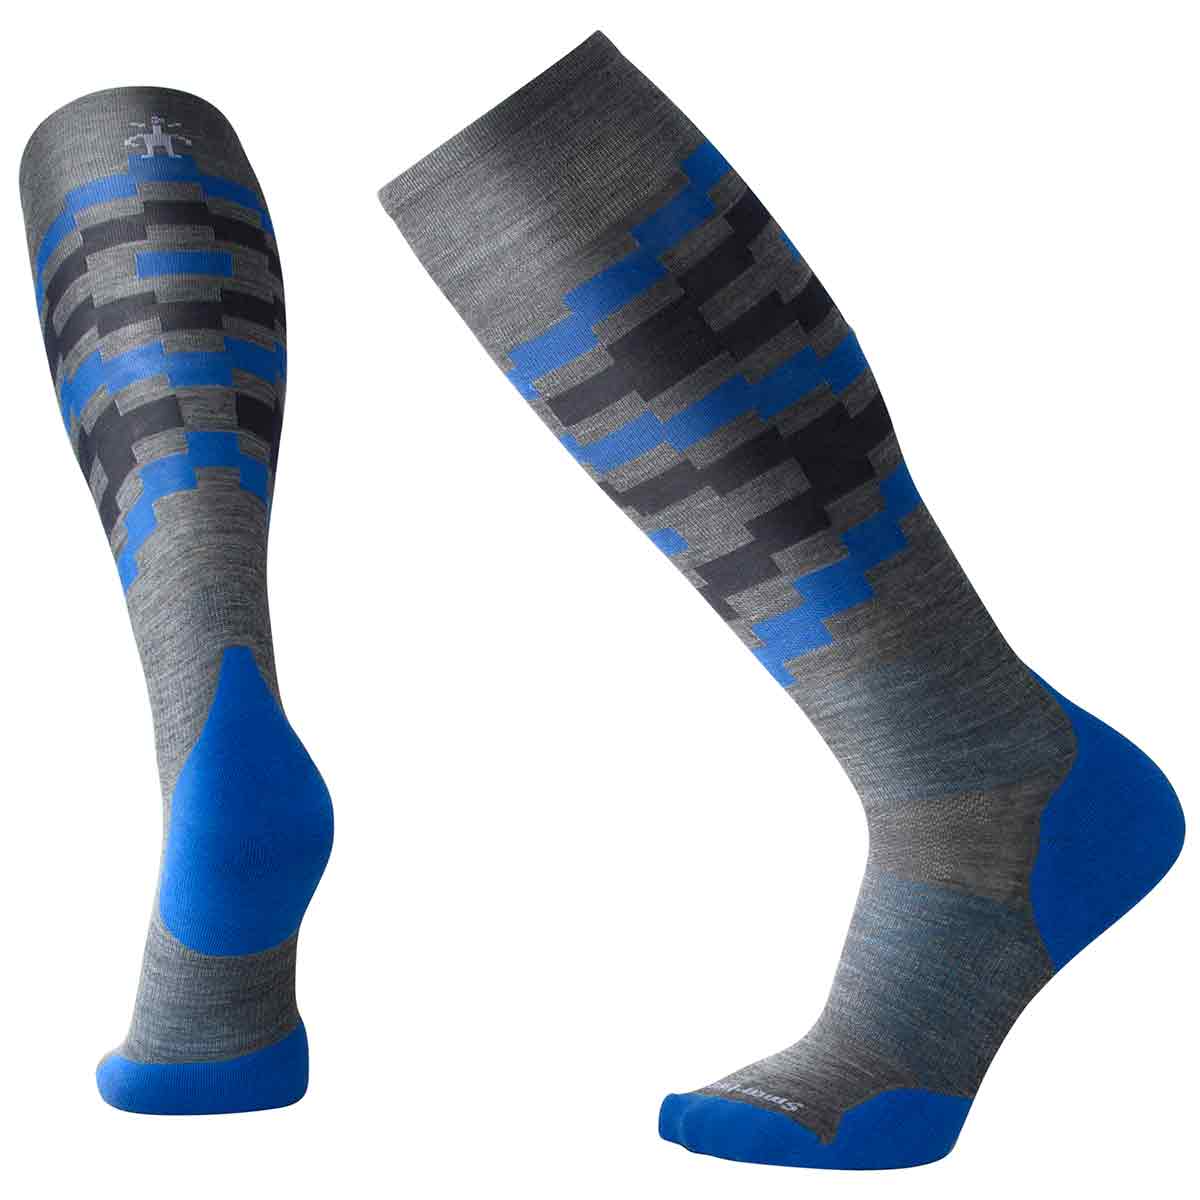 Smartwool Men's Phd Ski Light Elite Pattern Socks - Black, L